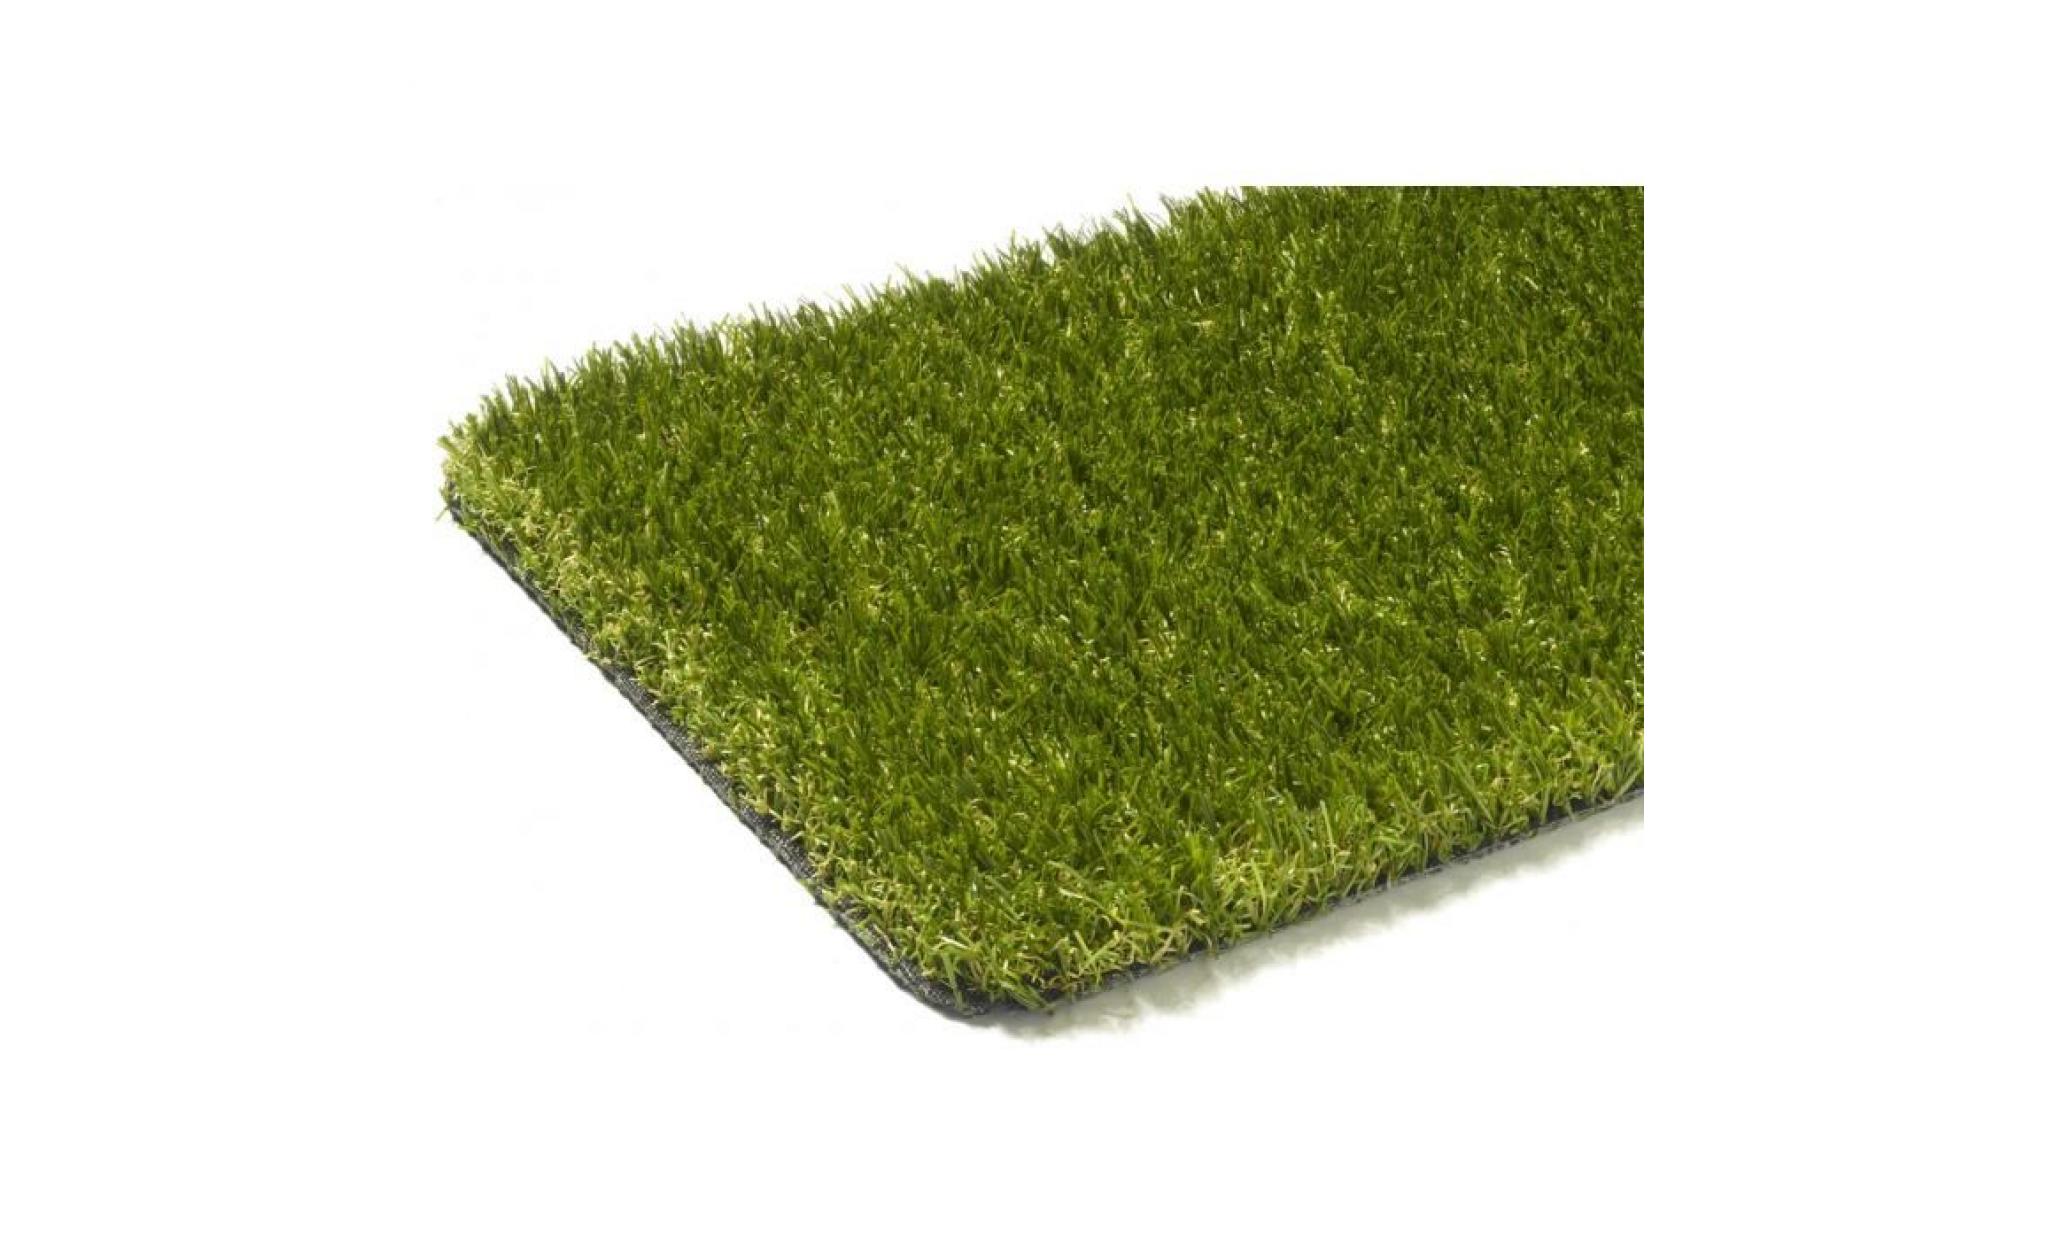 chelsea   tapis type luxe gazon artificiel – pour jardin, terrasse, balcon   vert  [200x200 cm]